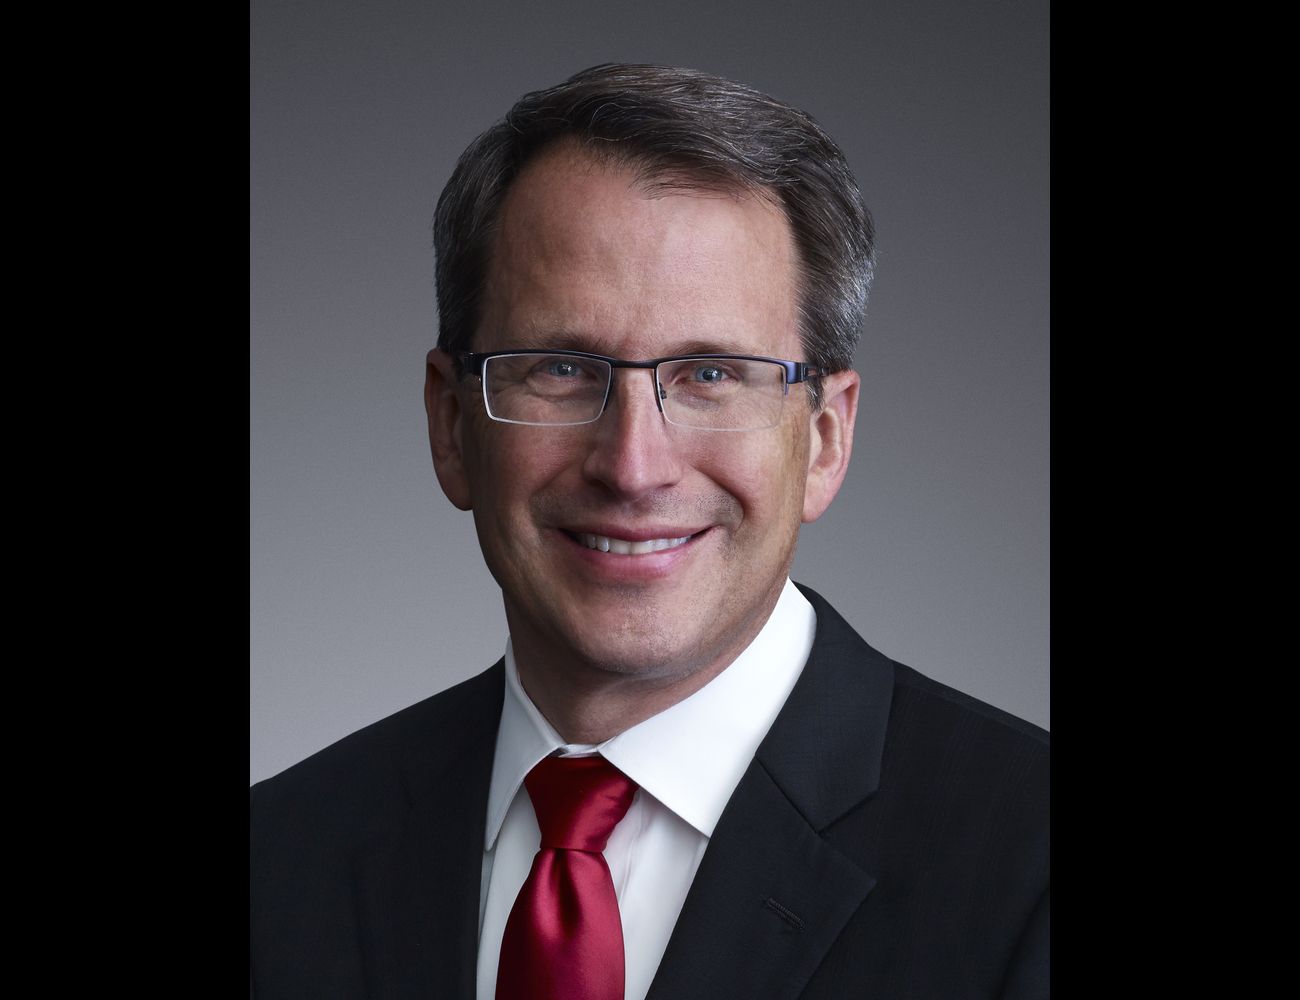 Rick Bergman, president and CEO